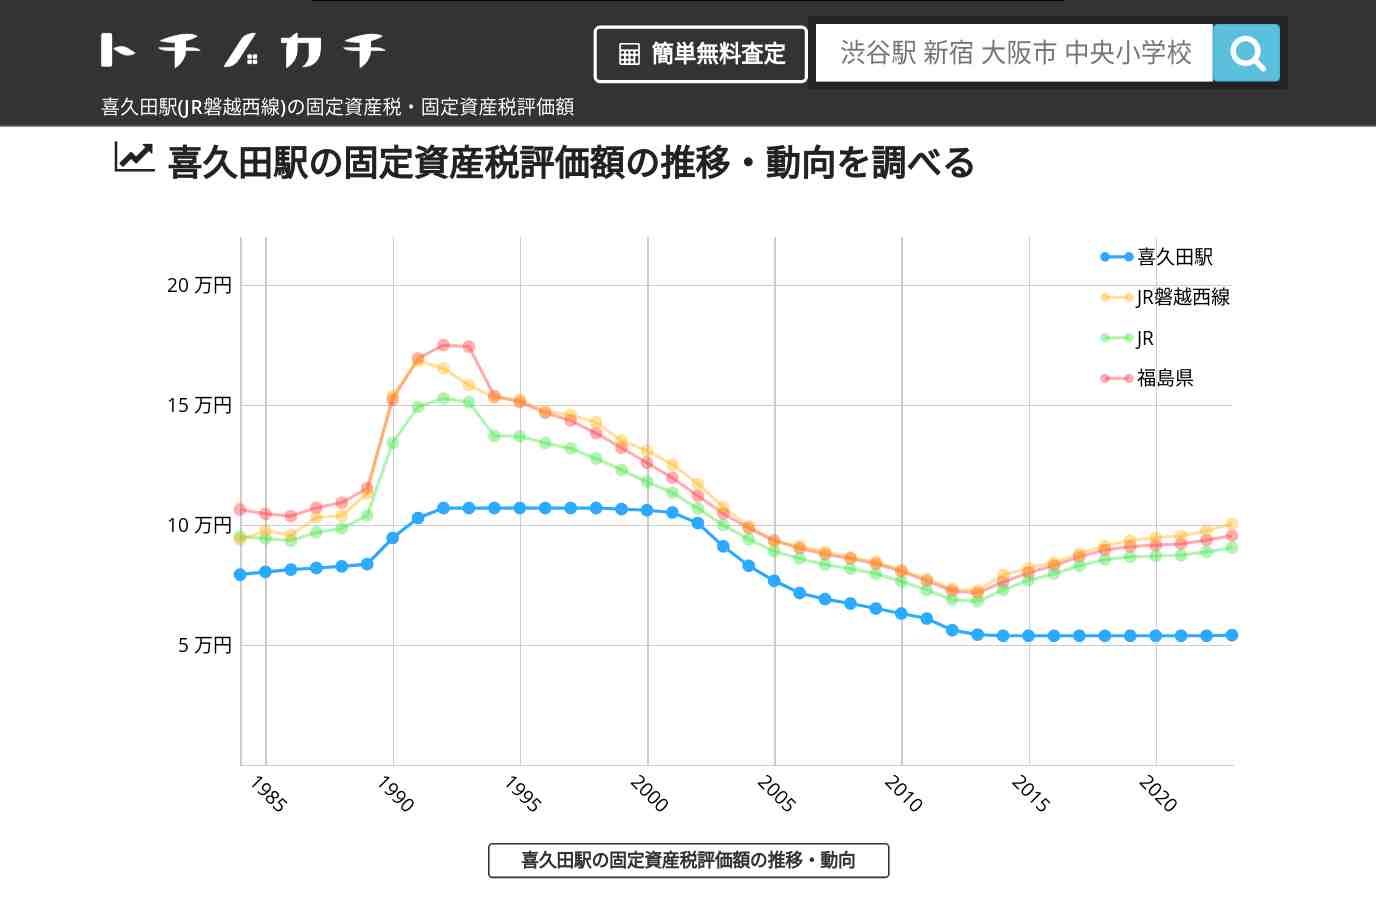 喜久田駅(JR磐越西線)の固定資産税・固定資産税評価額 | トチノカチ